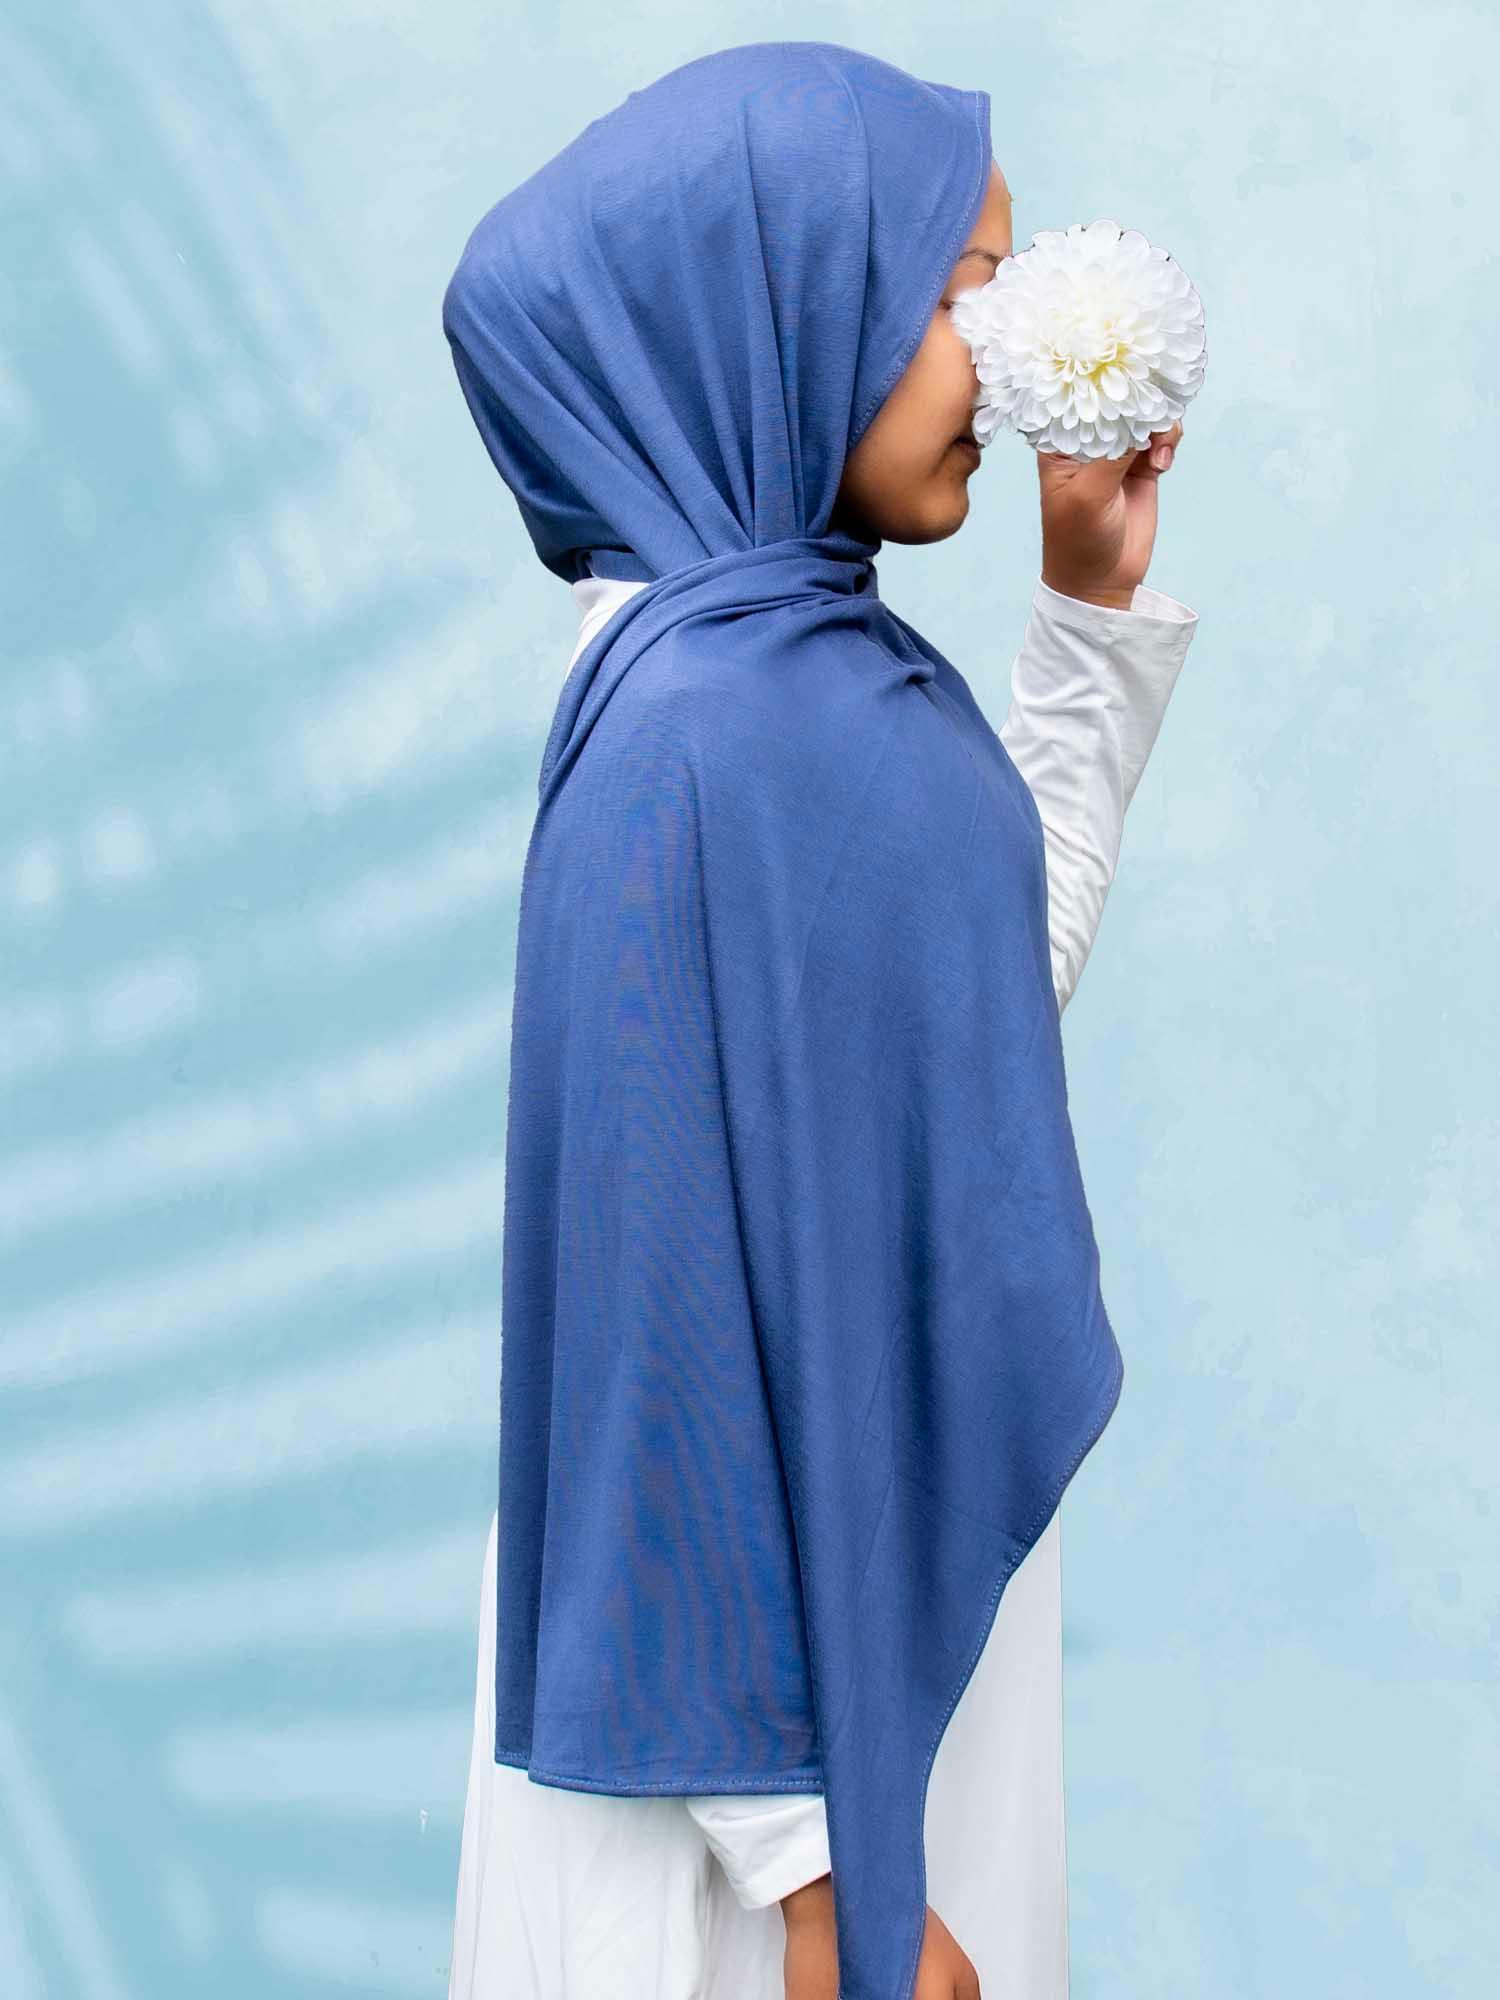 SoftTouch Perfect Fit Hijab in Denim Blue - BubbleGirl